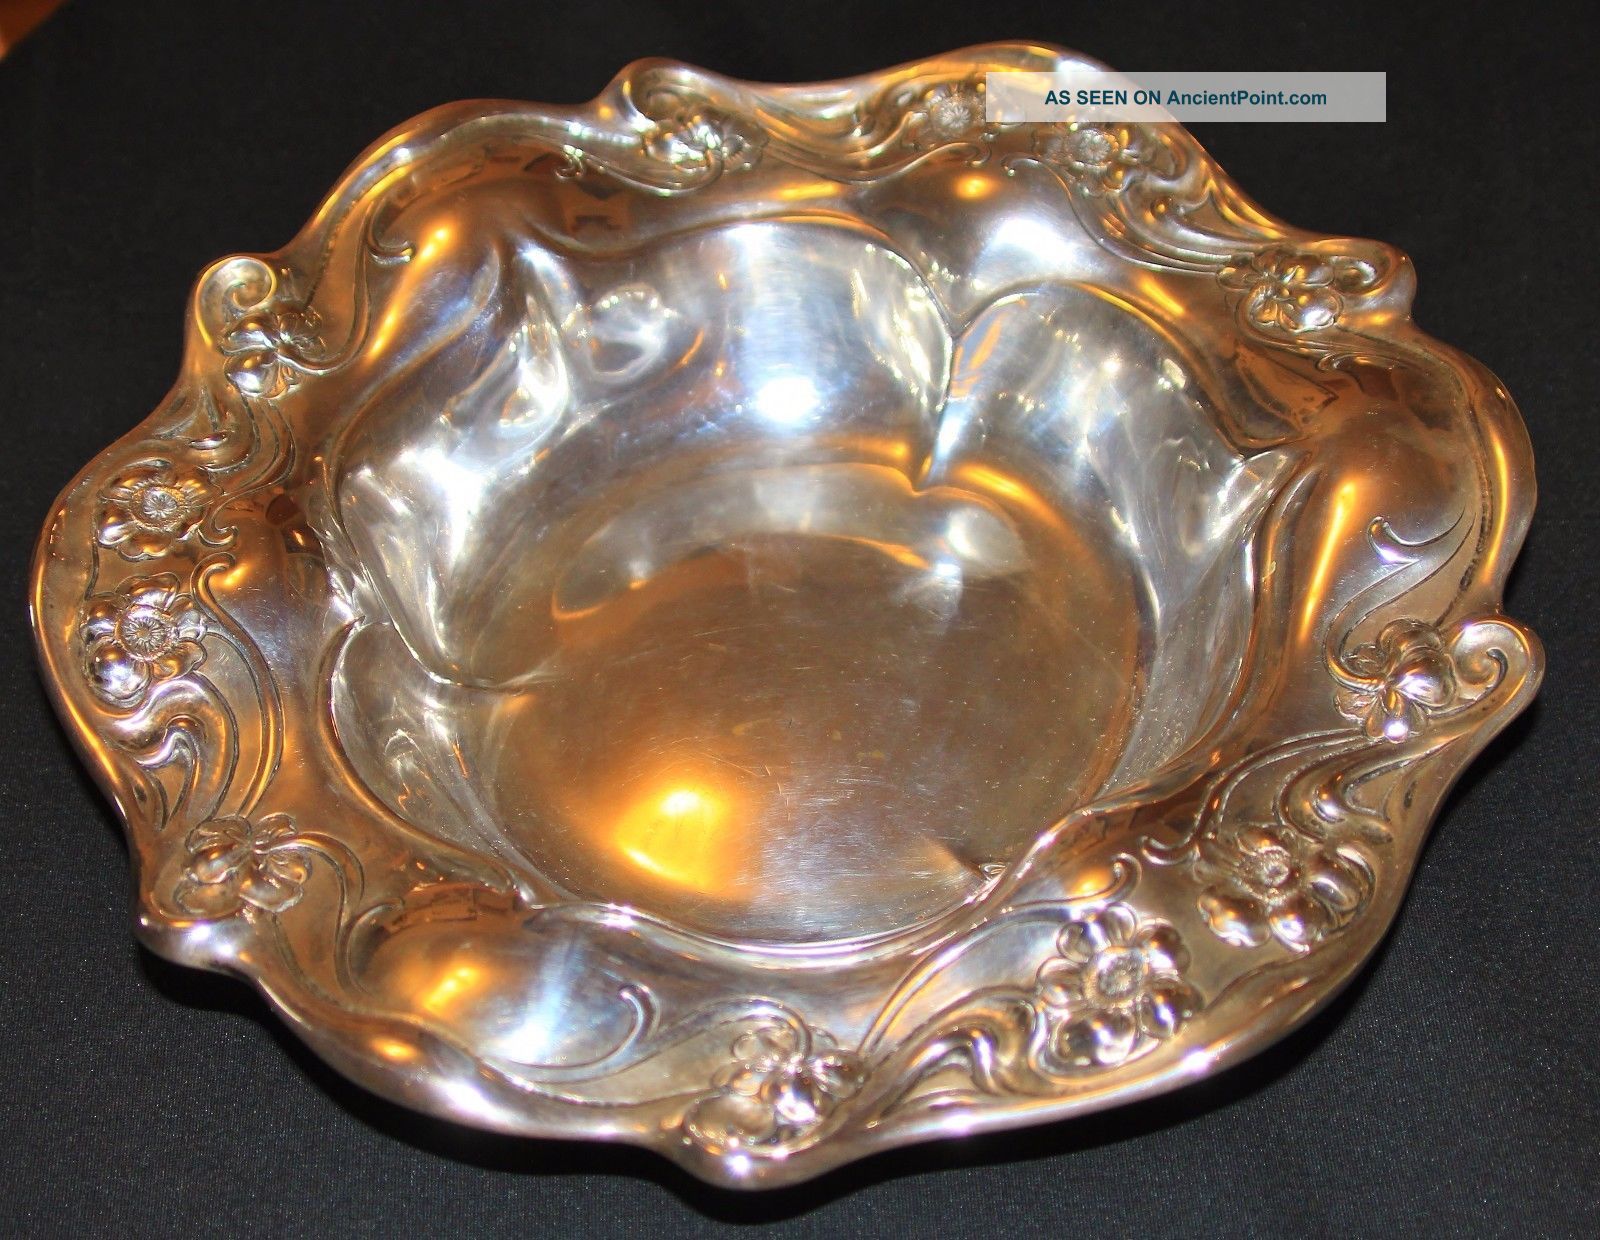 Antique Sterling Silver Serving Bowl - 1905 - Gorham 4850a - Rare Flatware & Silverware photo